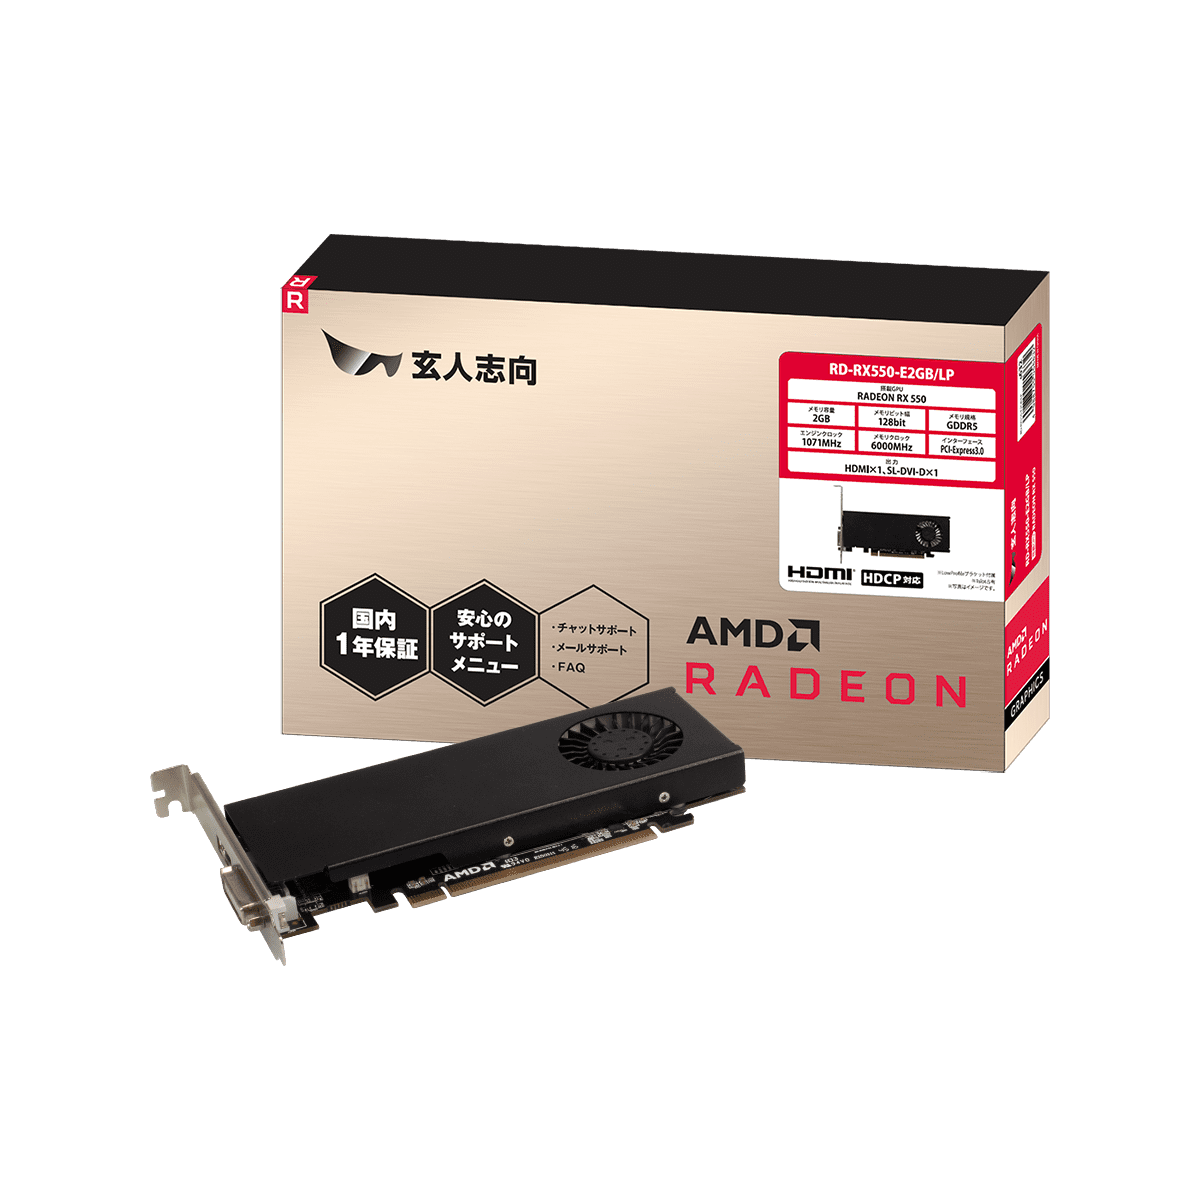 RD-RX550-E2GB/LP | Radeon RX 550 搭載 グラフィックボード (PCI 